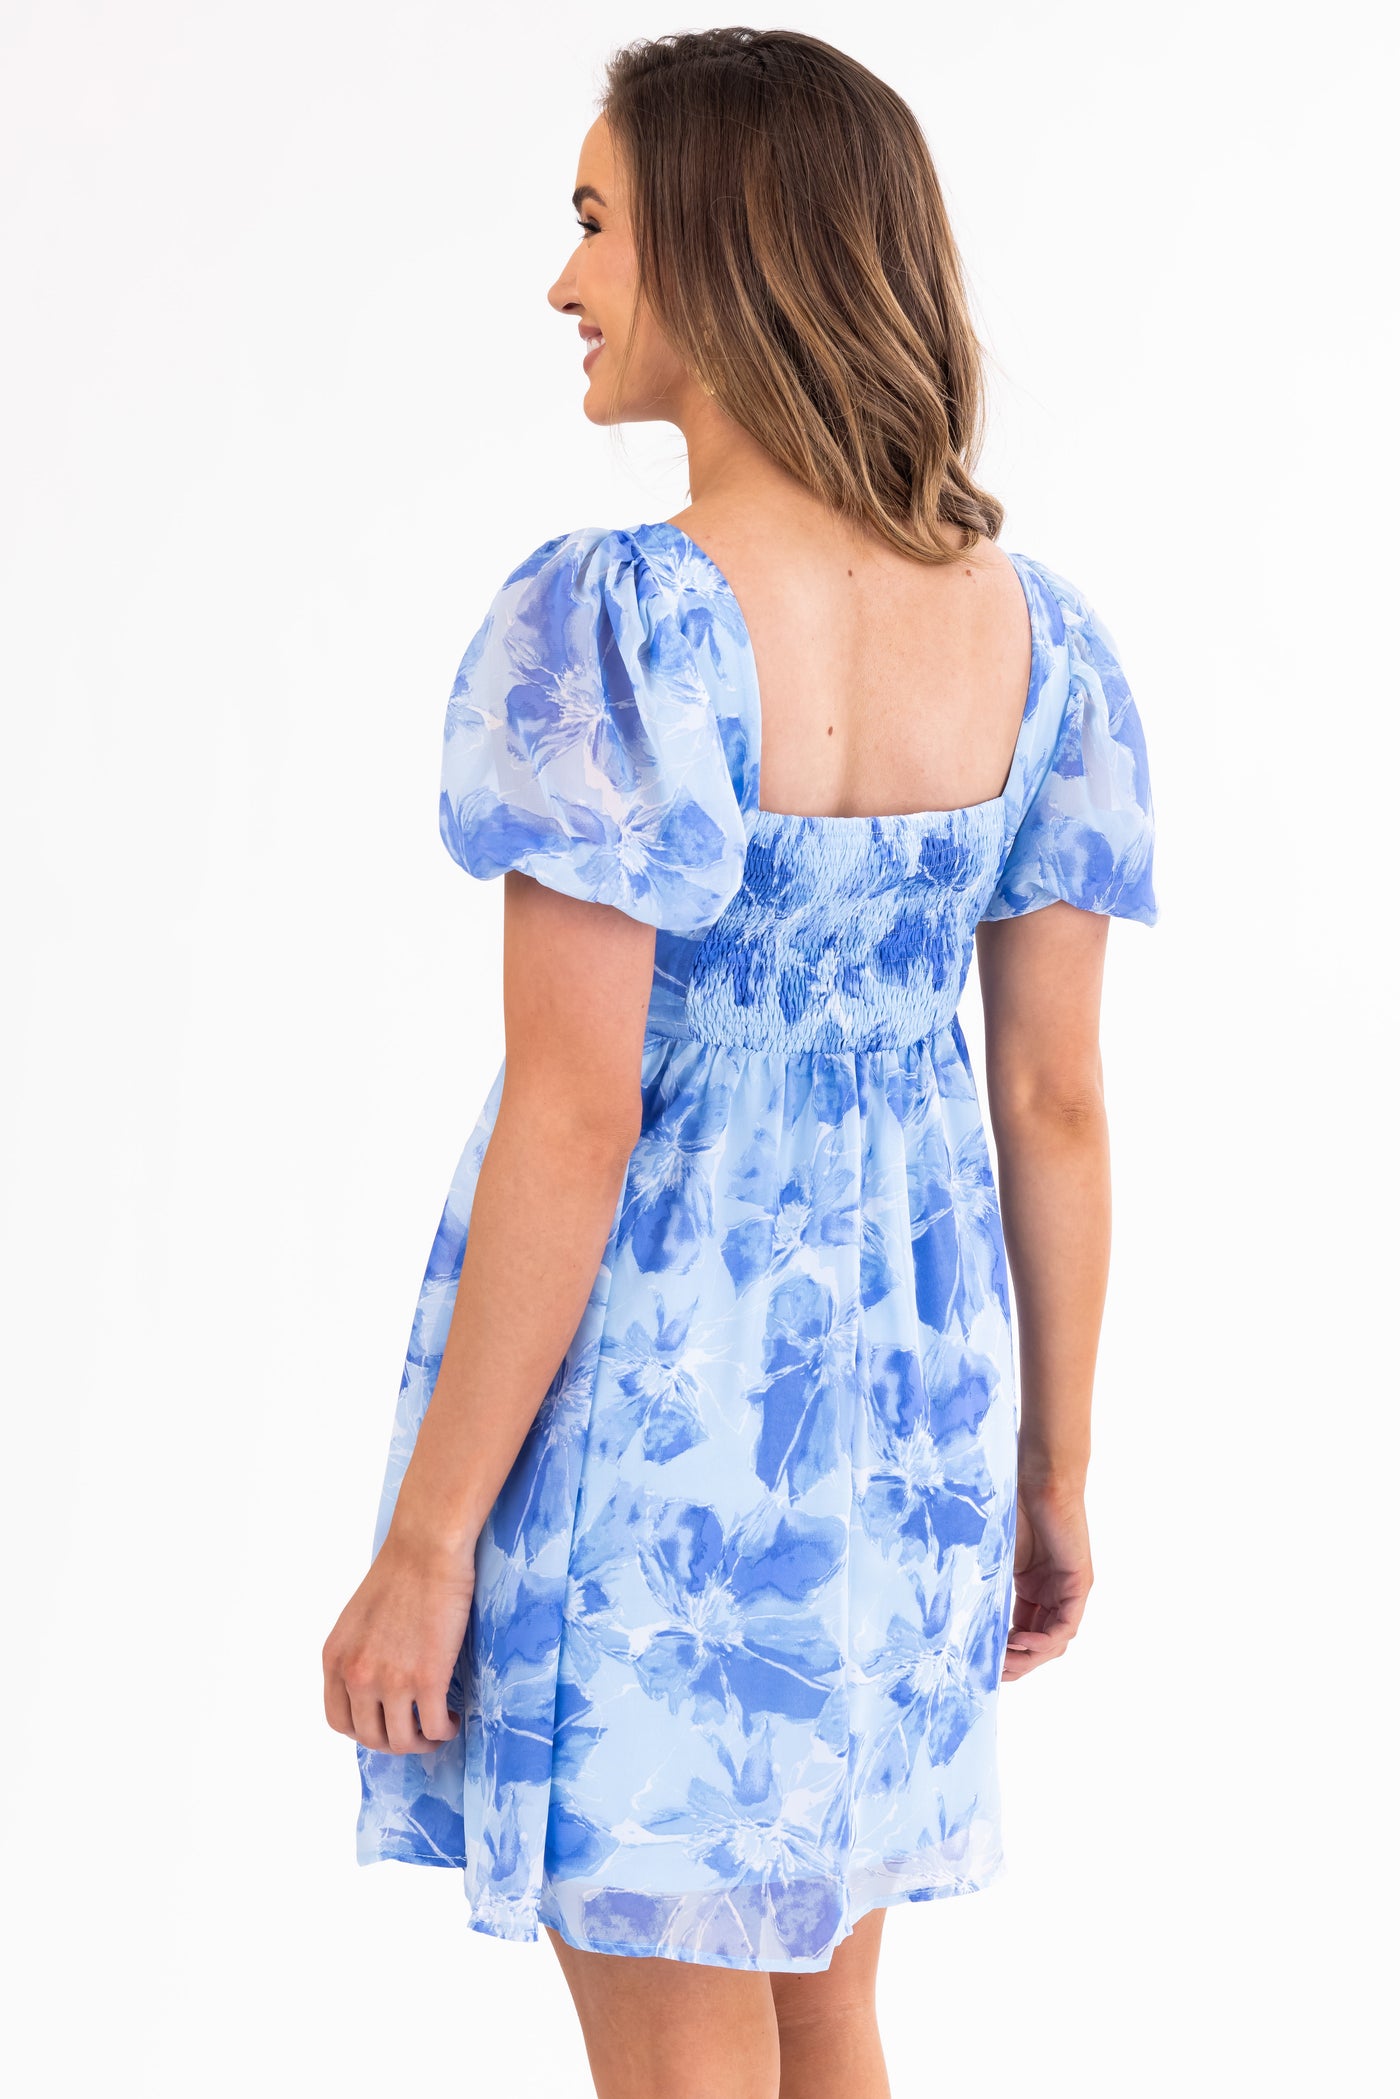 Baby Blue Floral Print Babydoll Short Dress